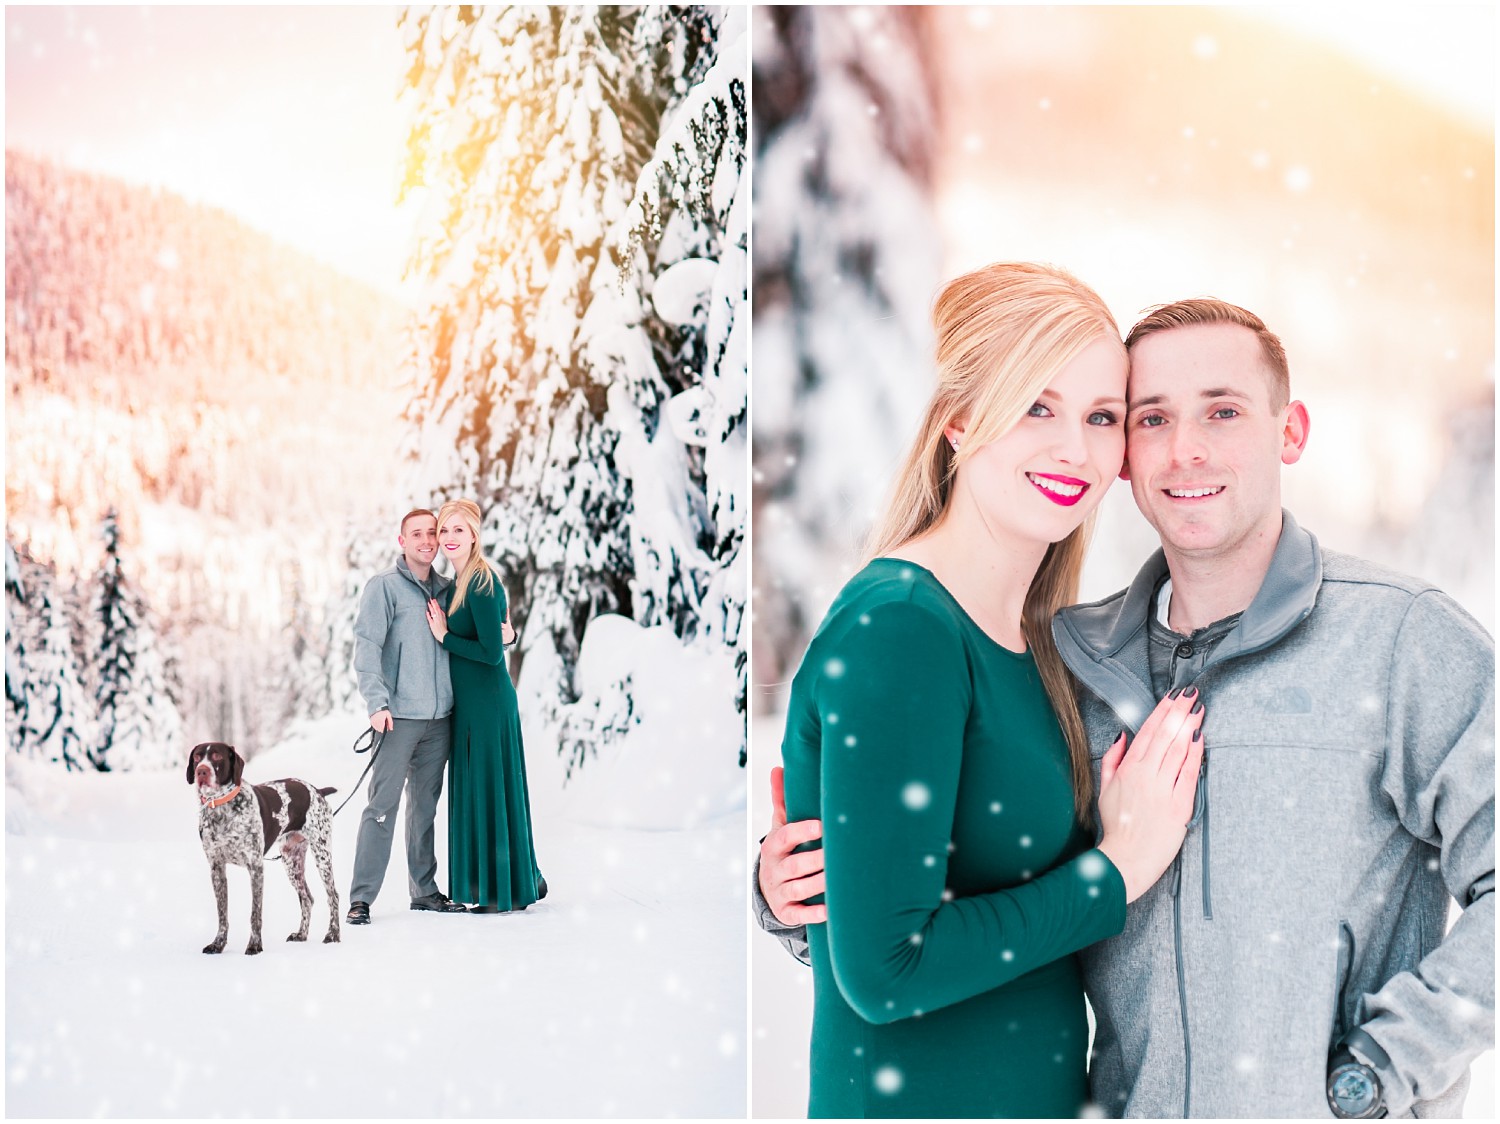 Winter Sunset Snoqualmie Pass Engagement | Cameron & Laura